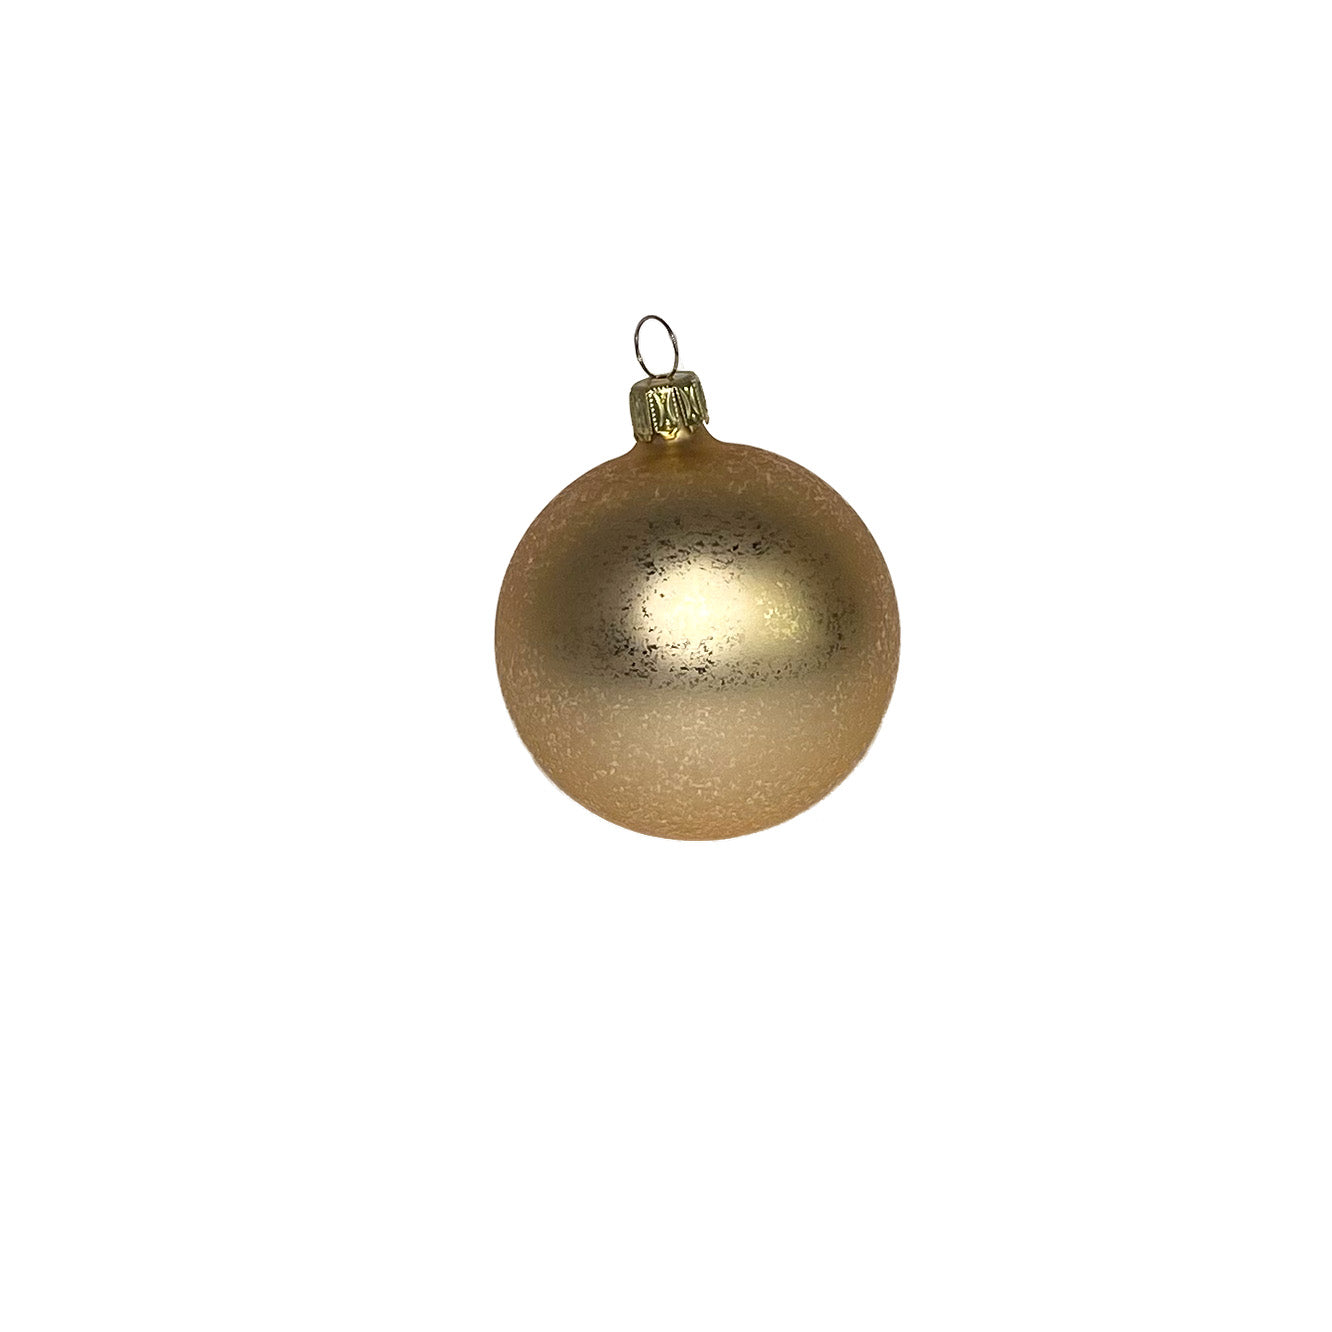 6cm Christbaumkugel gold matt mit Blattgold Effekt - Satin Glow